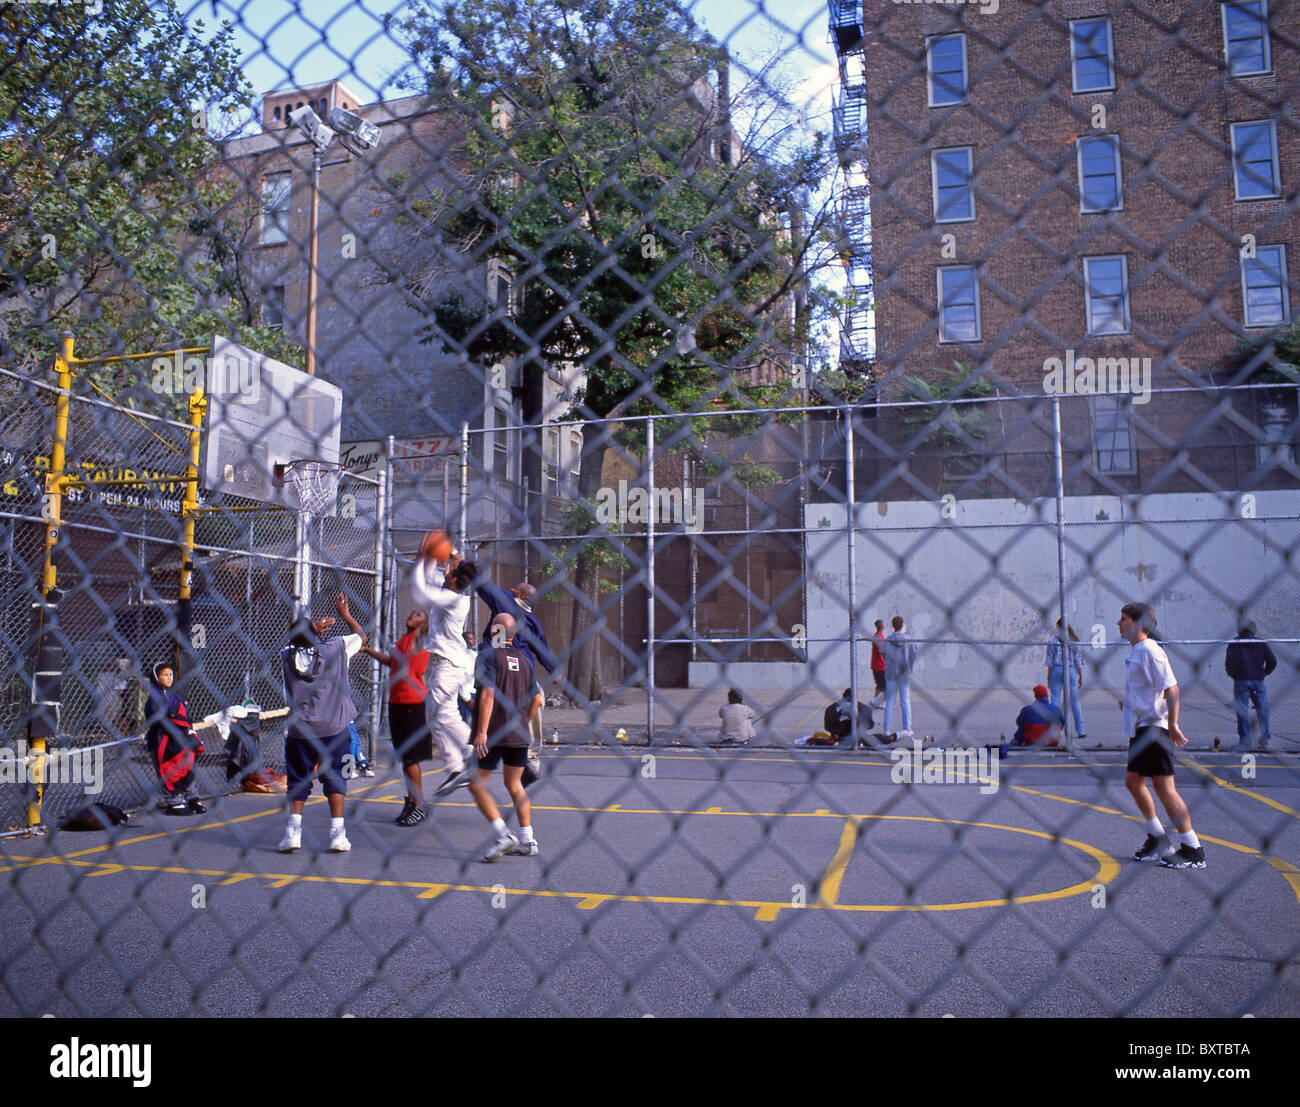 Inner city basketball court Manhattan New York New York State Stock